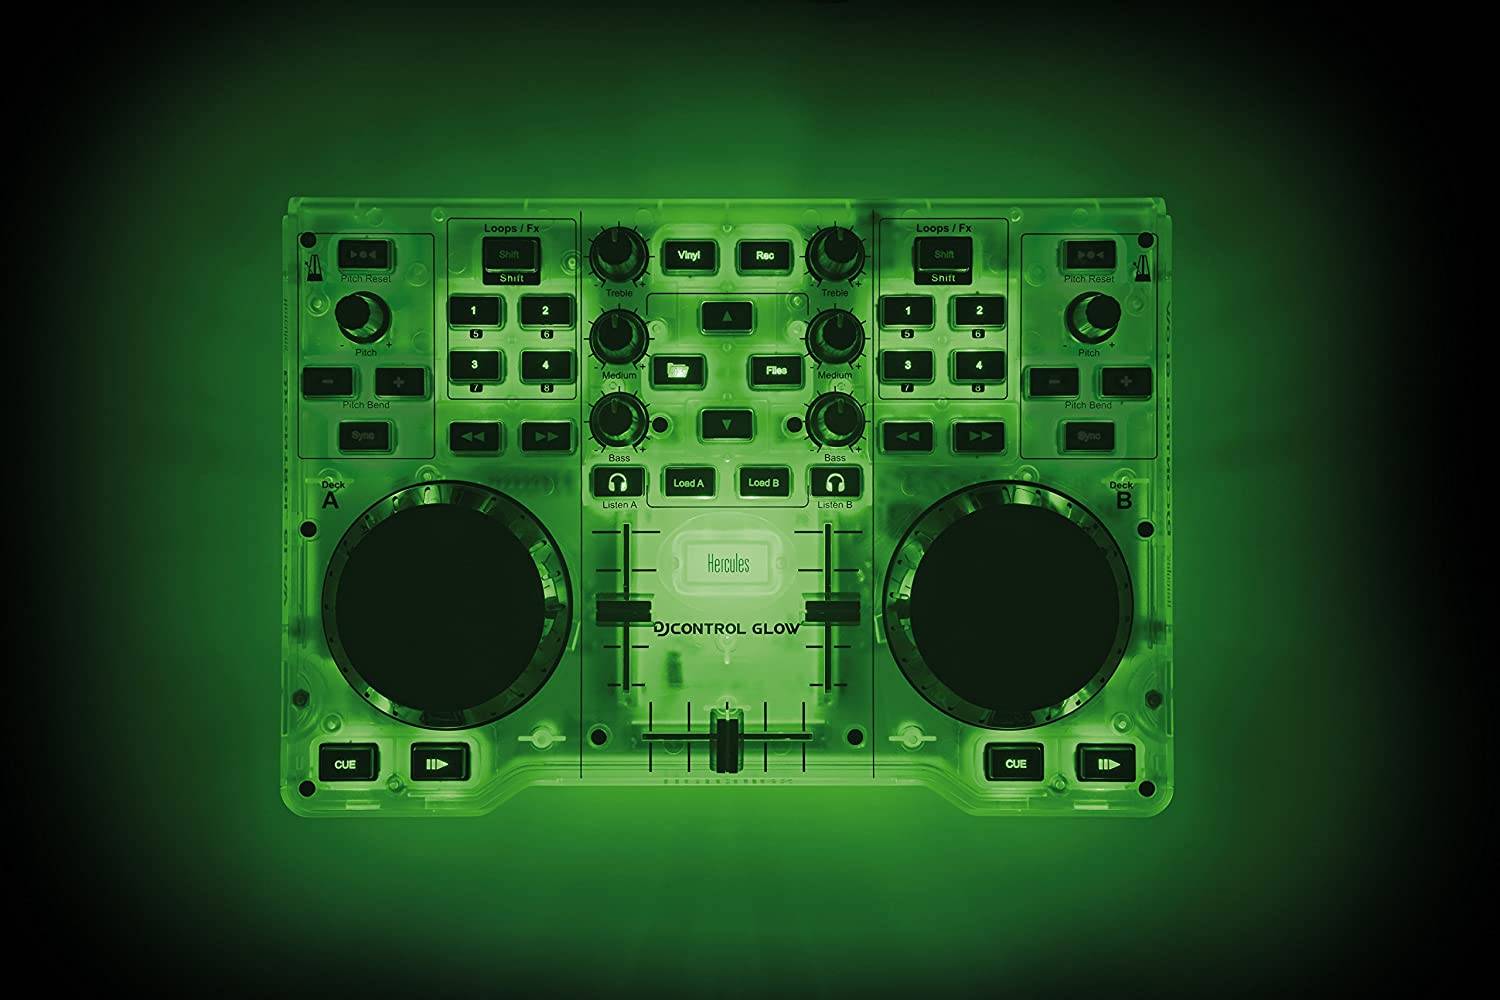 Hercules DJ Control Glow Green 4780839